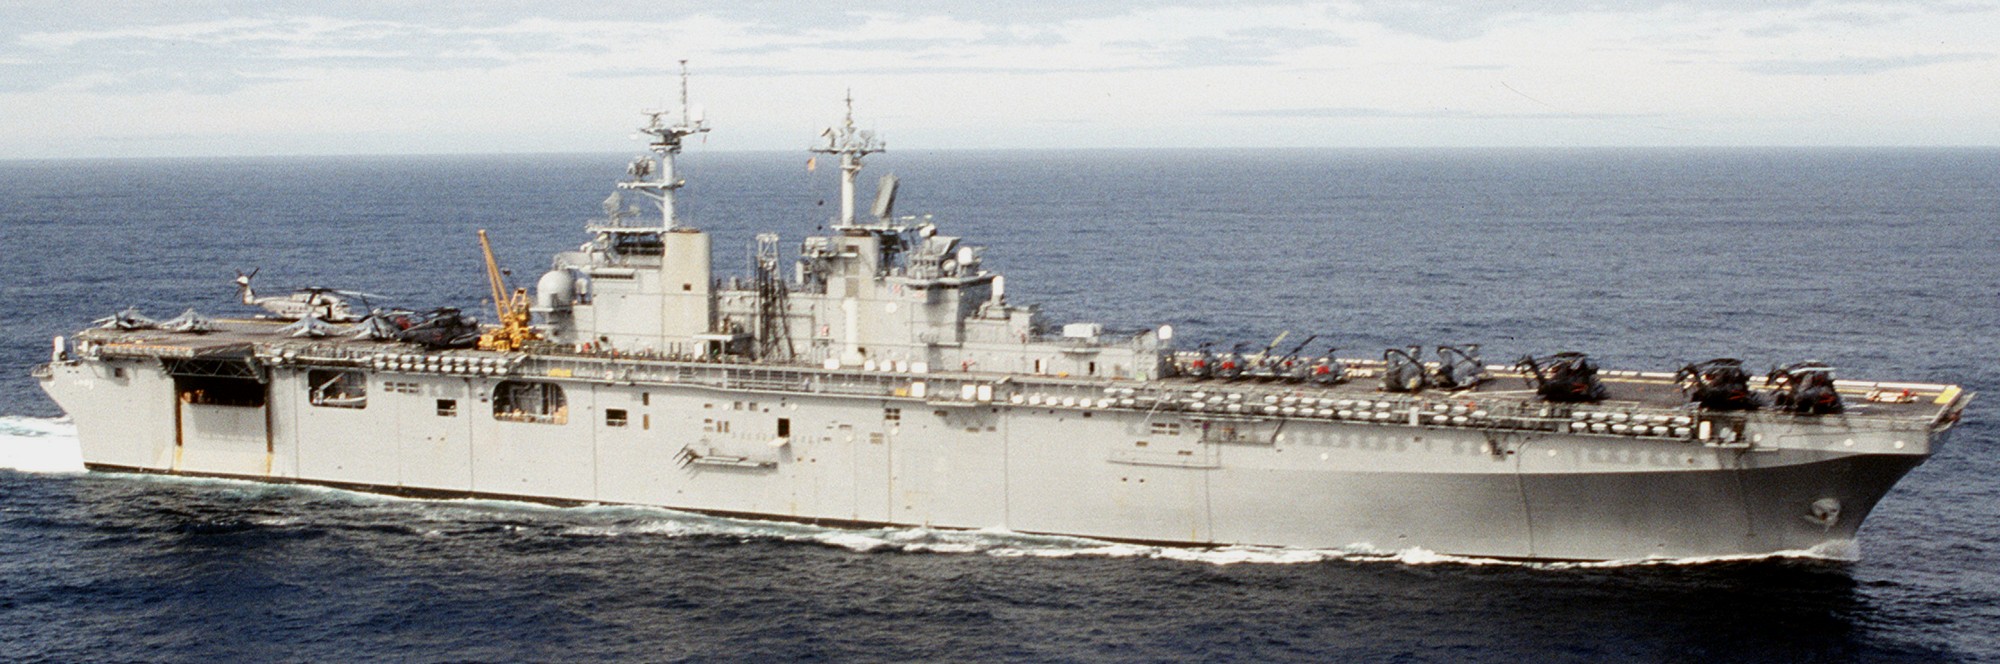 lhd-1 uss wasp amphibious assault landing ship dock helicopter us navy 97